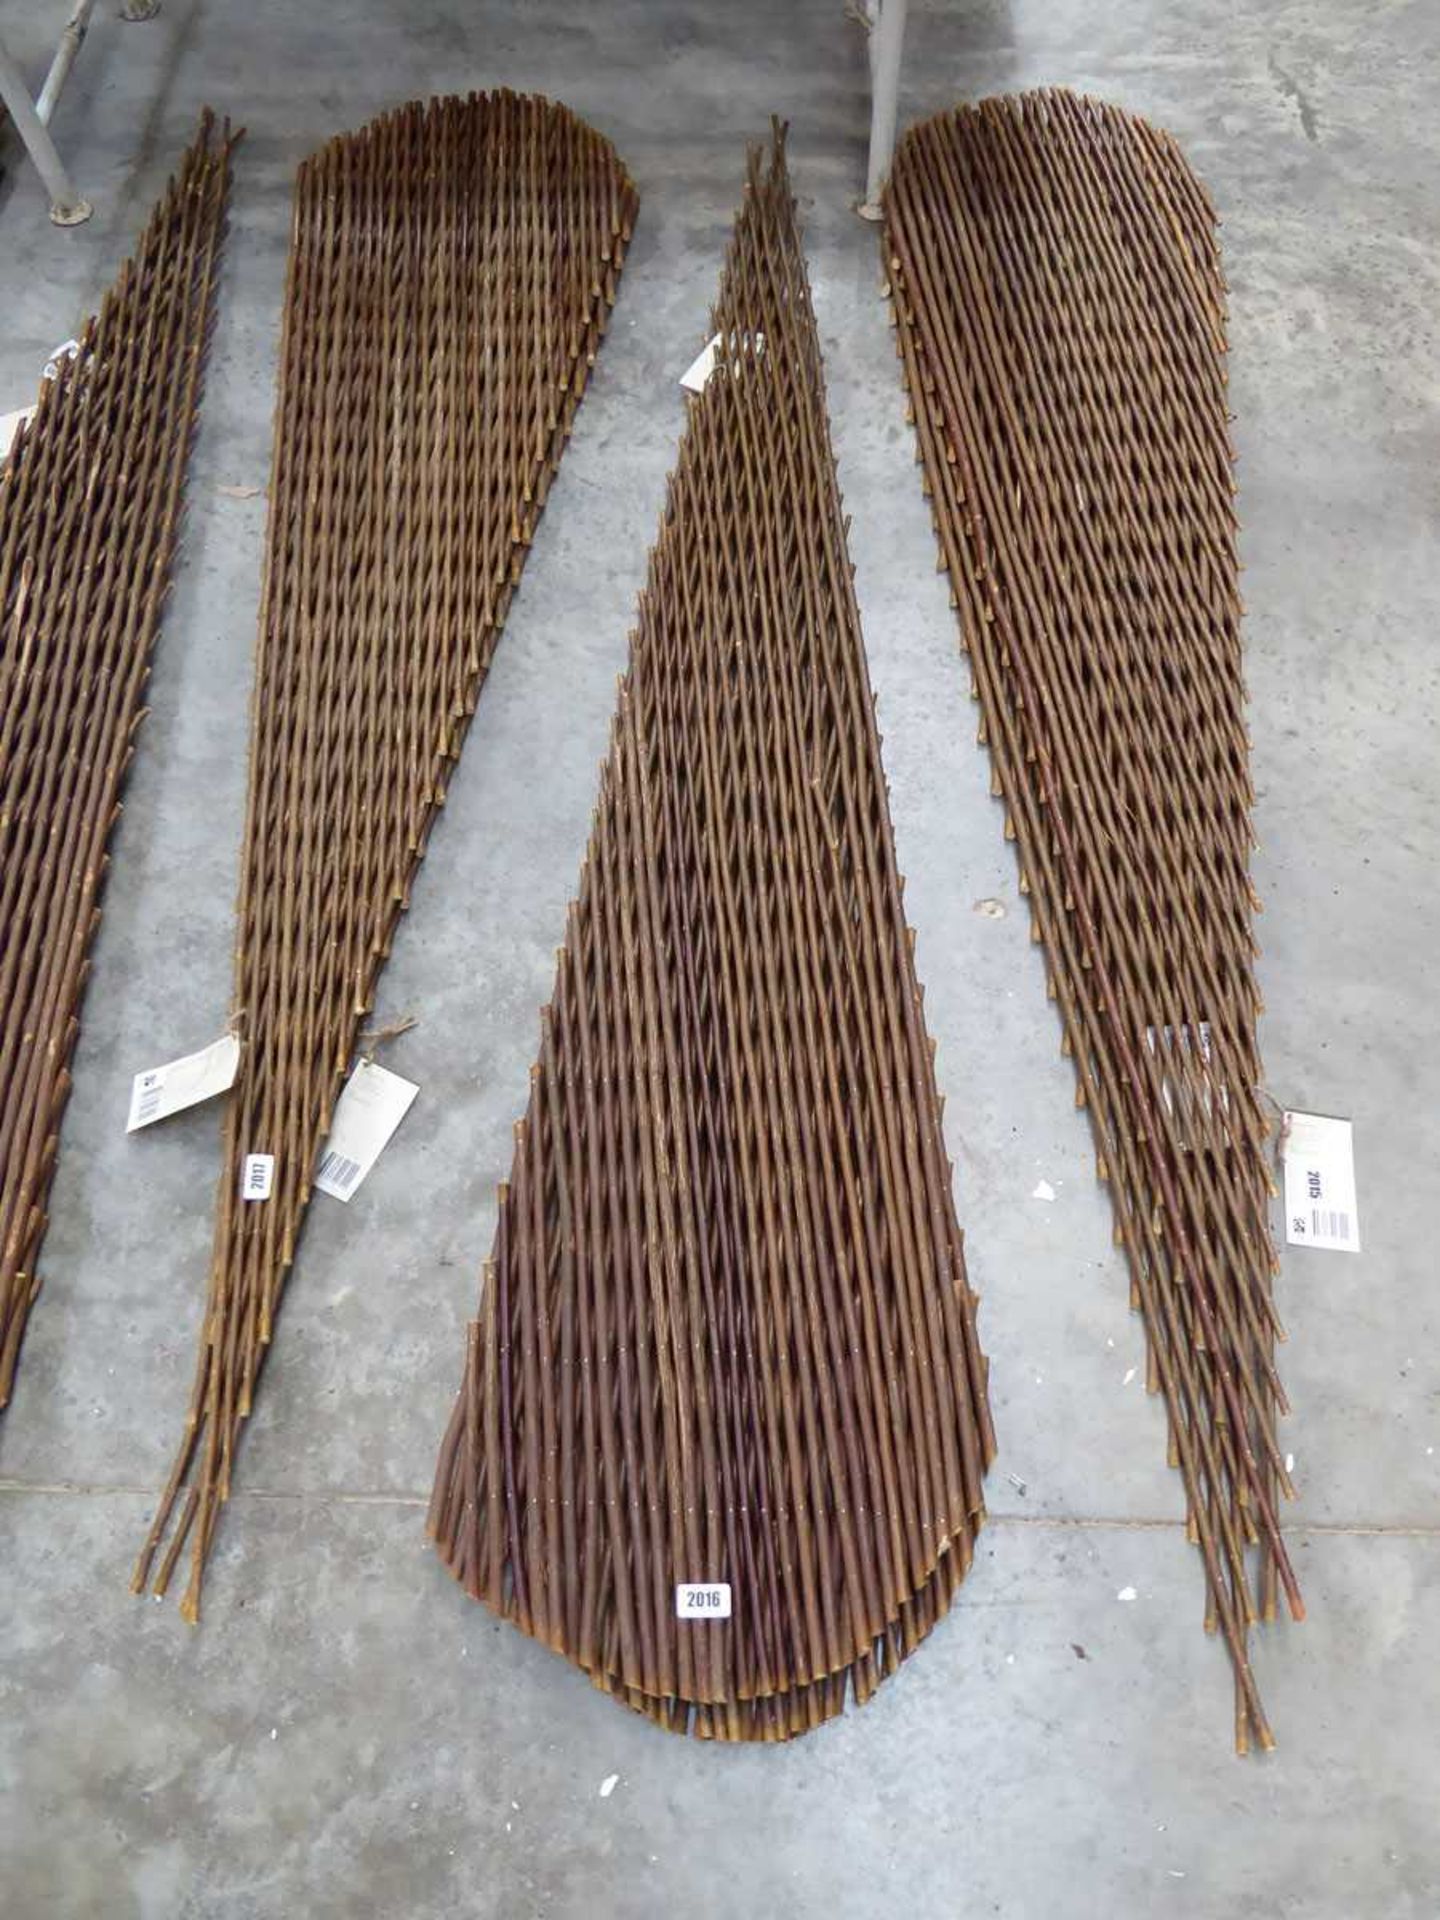 Pair of 180 x 90cm. expanding willow fan trellis panels